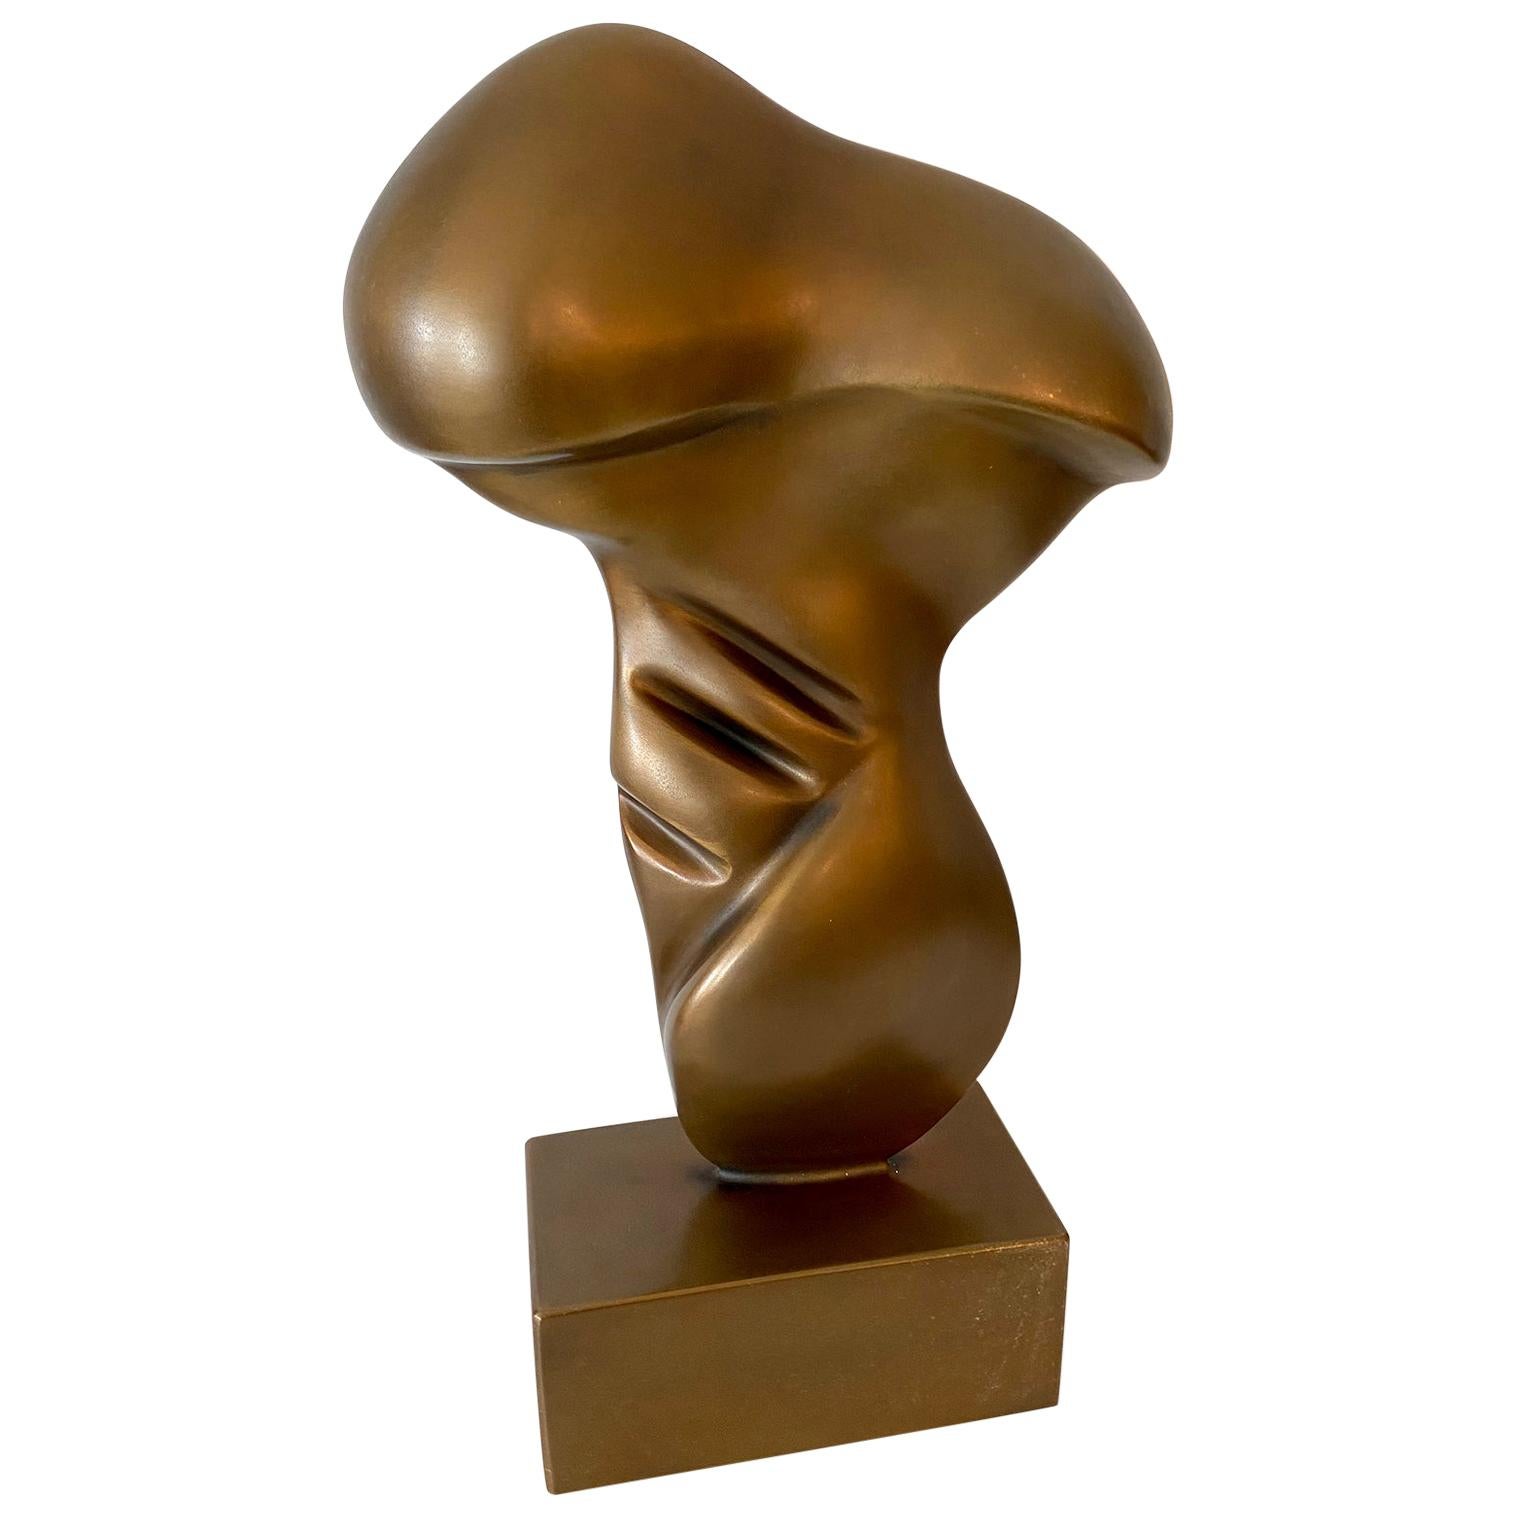 American Modern Sculpture "Torso" by Korean Artist Hyunae Kang For Sale